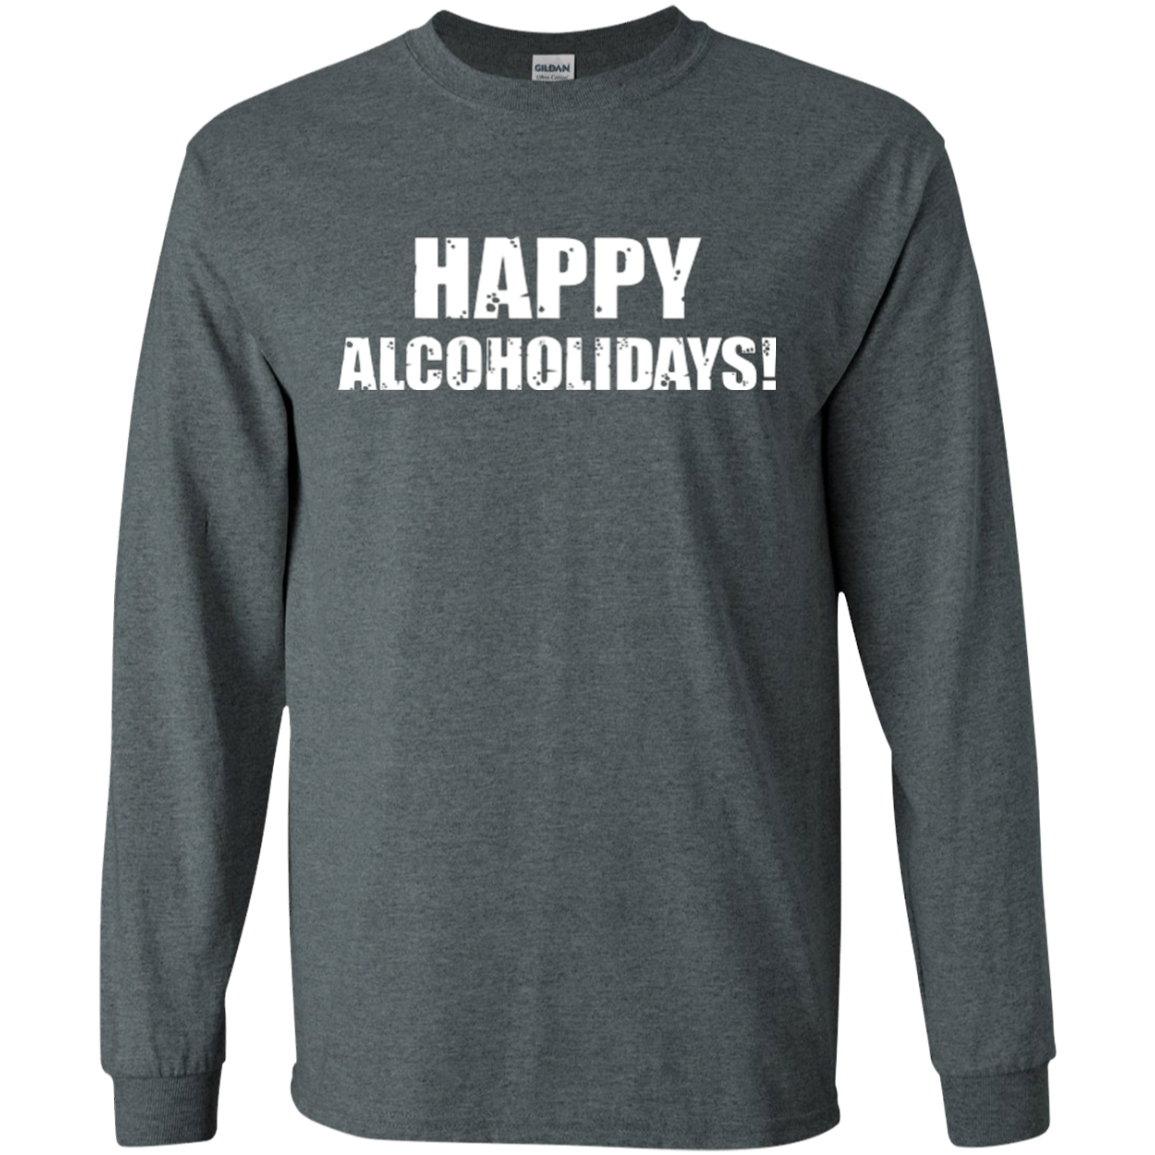 Happy Alcoholidays!